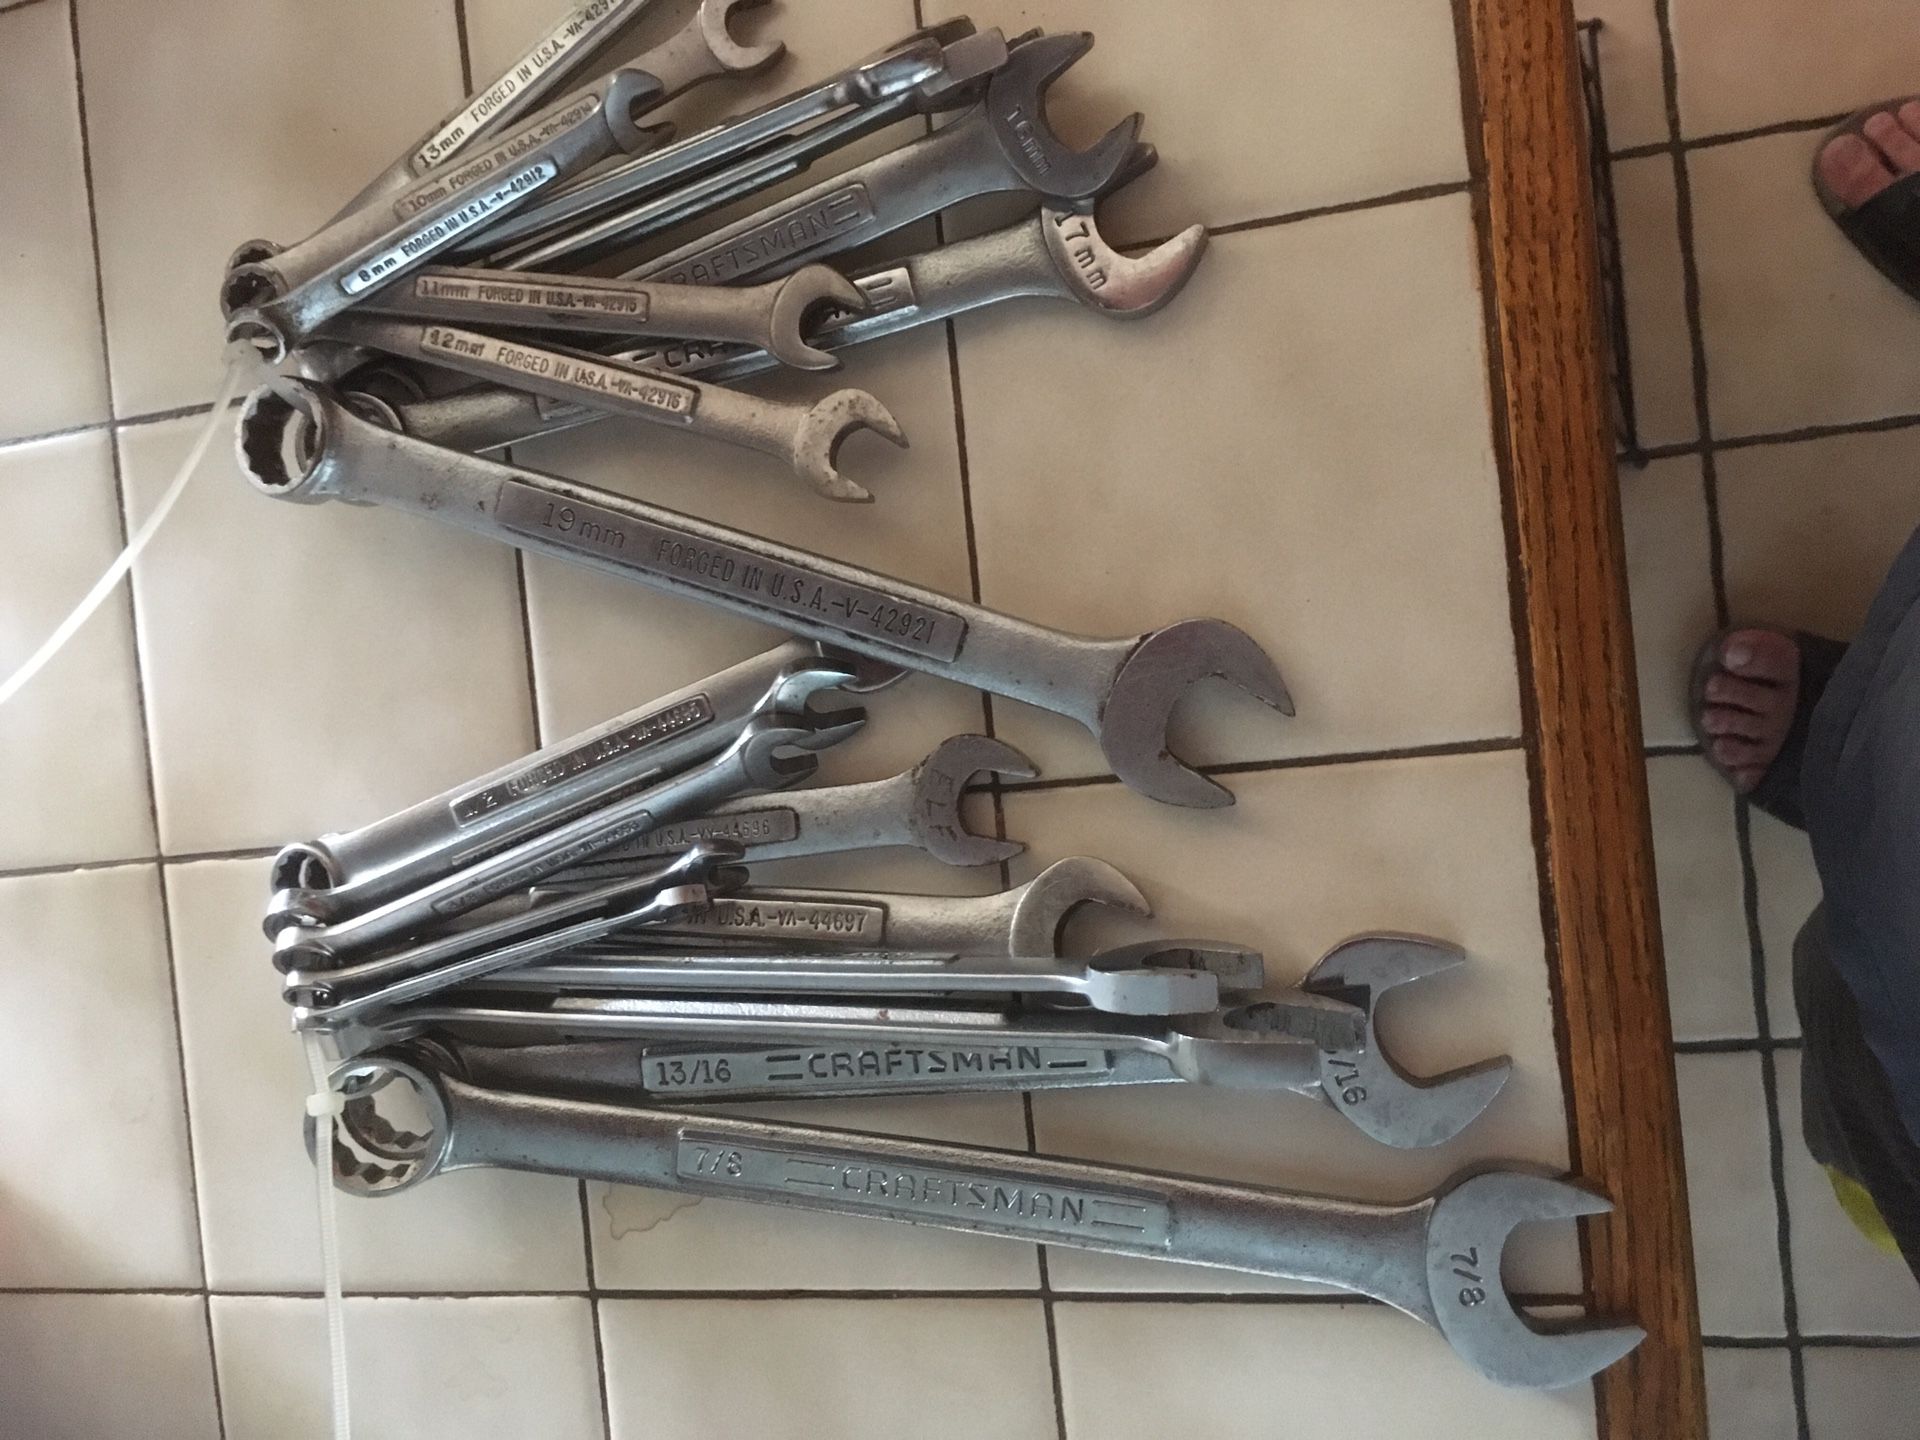 Craftsman wrench sets